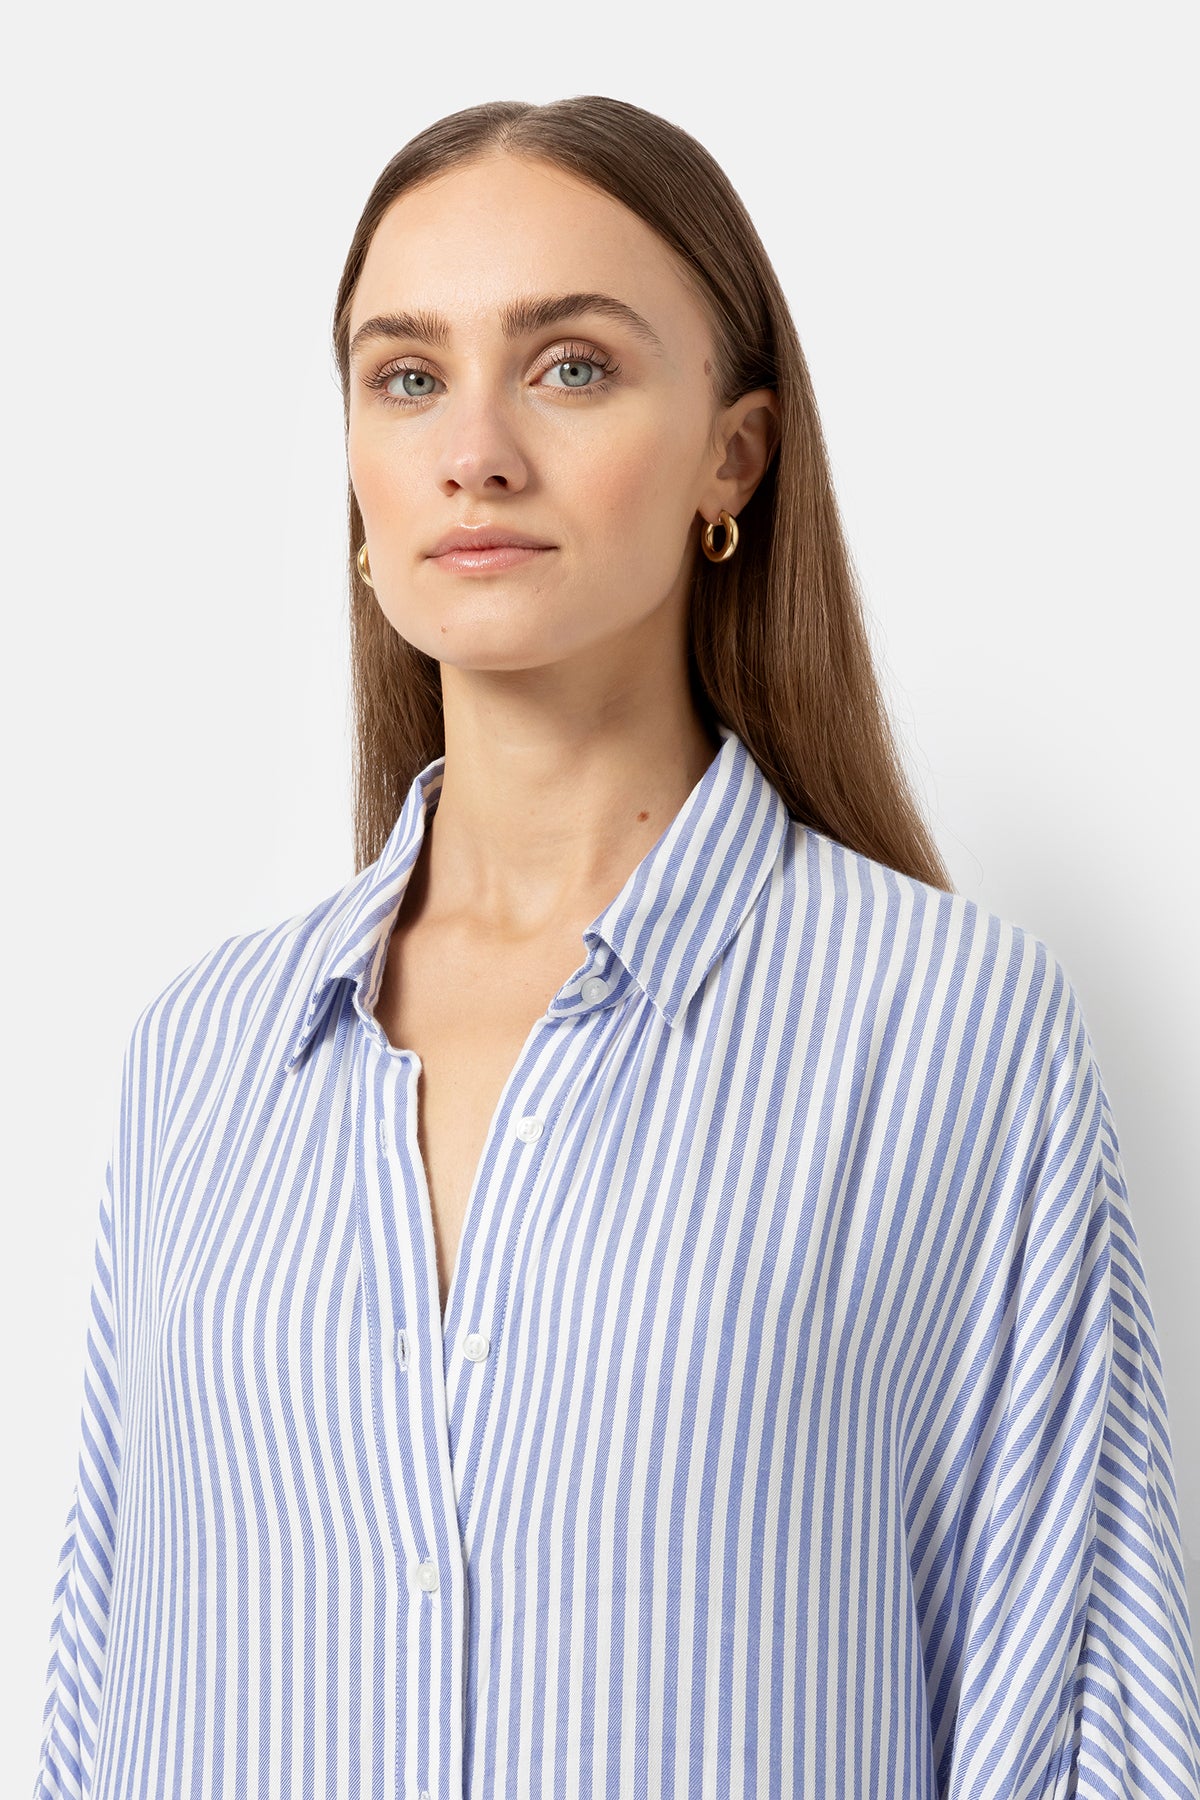  Jelena Long Shirt Dress | Rayures blanches et bleues